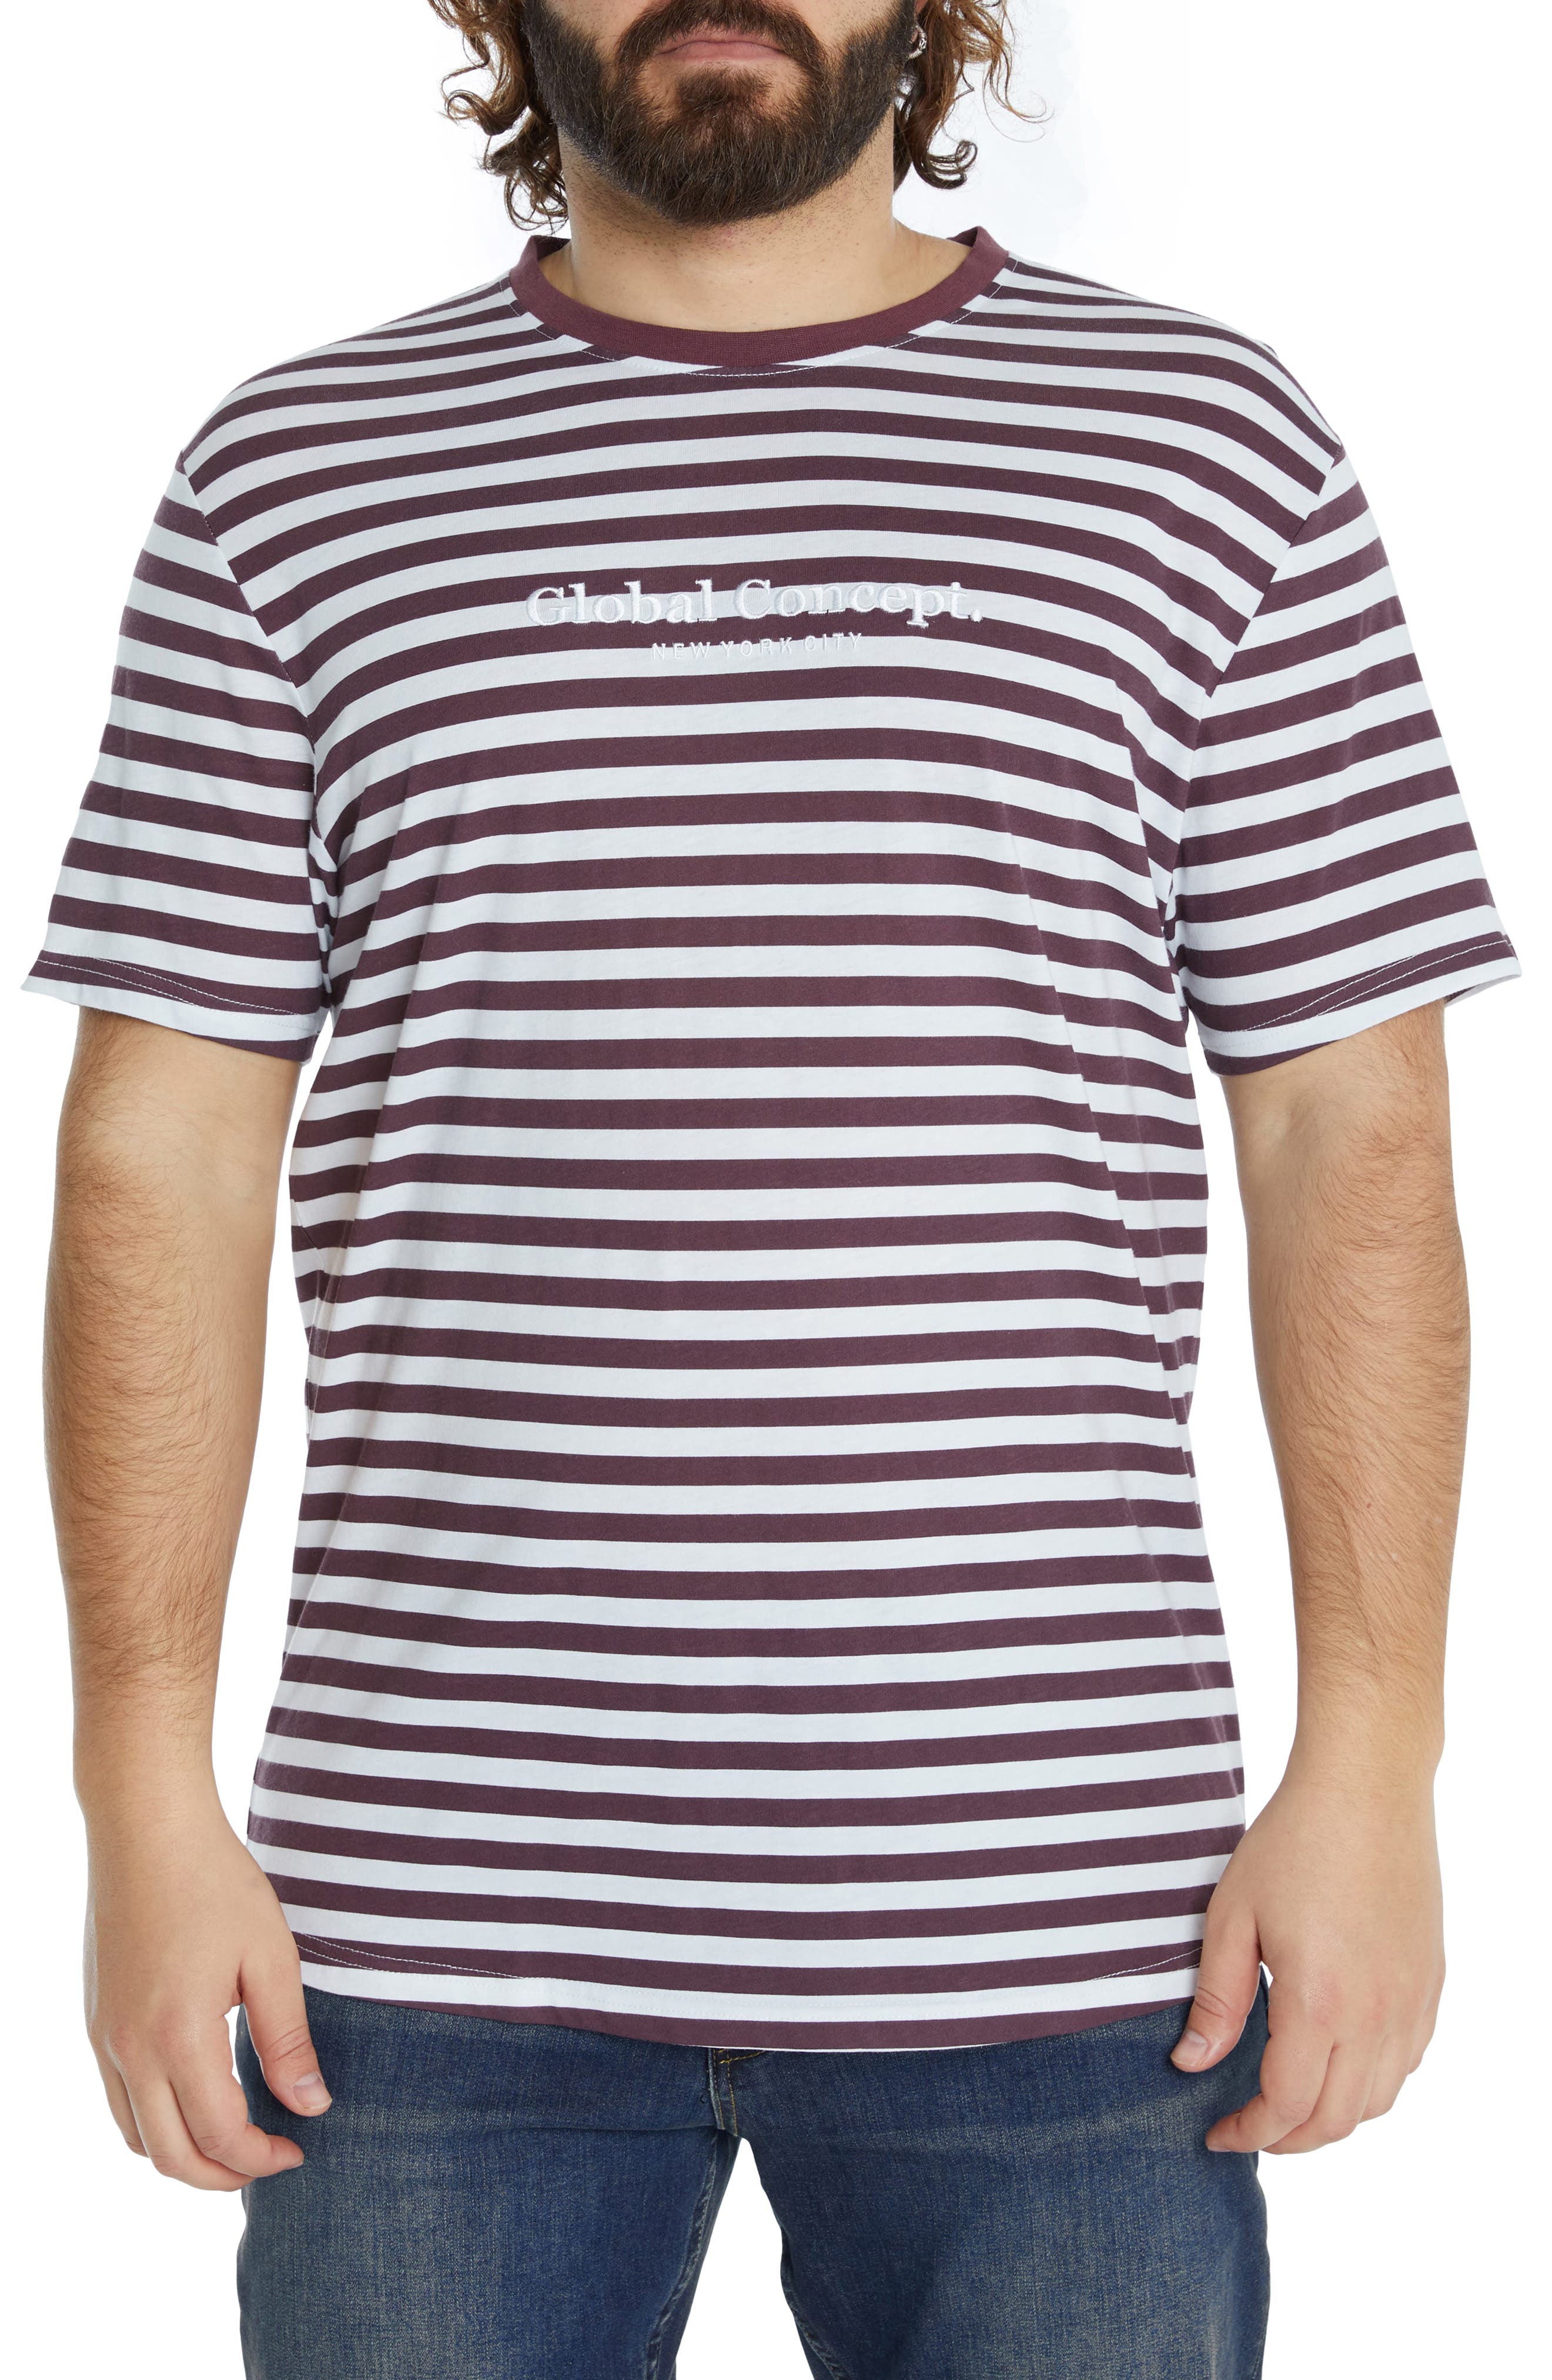 Johnny Bigg Global Stripe T-Shirt